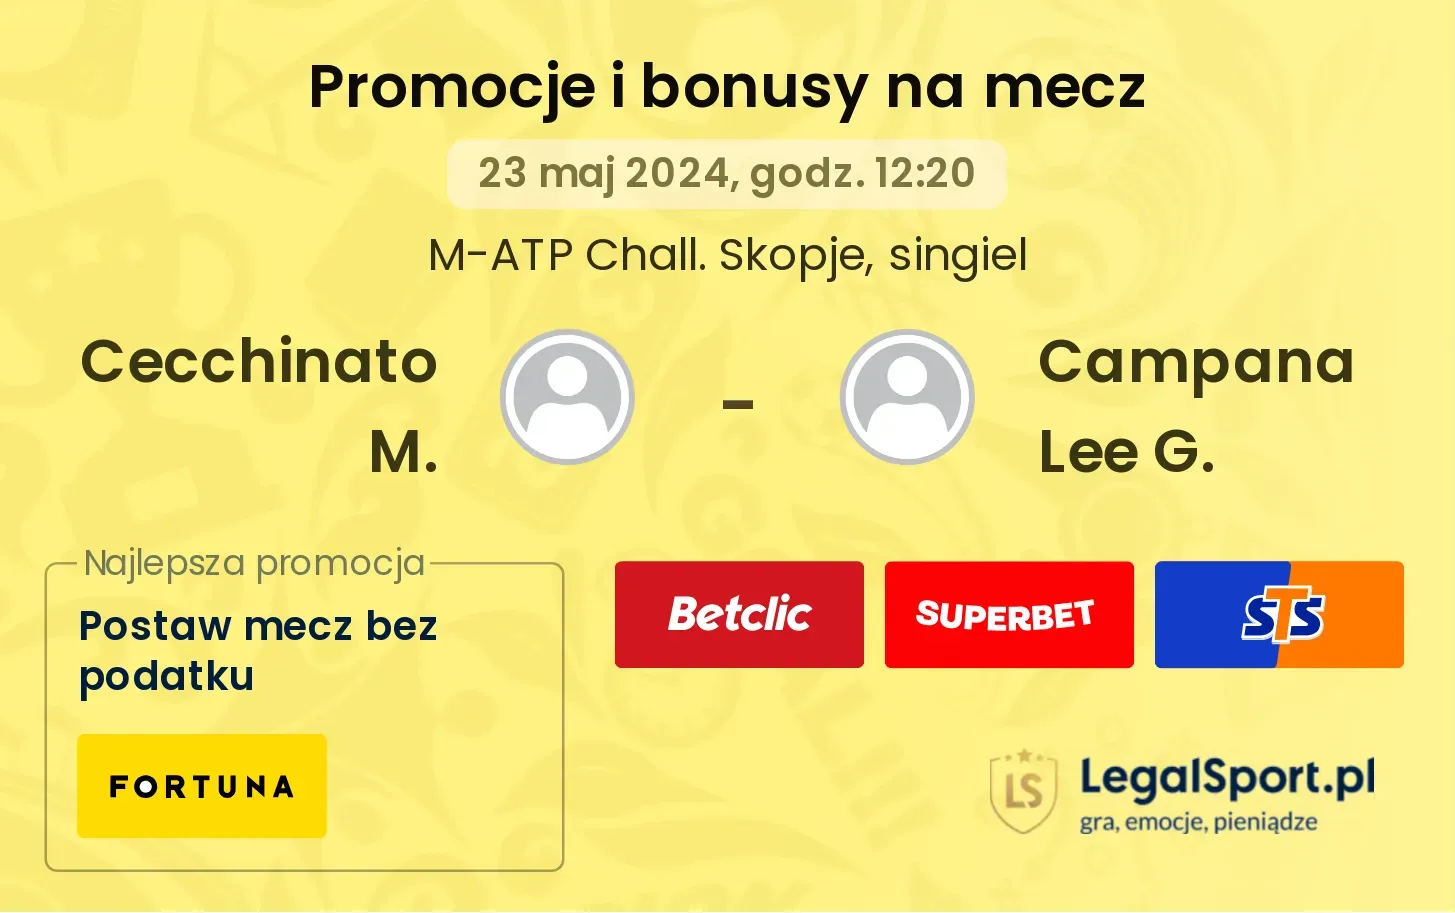 Cecchinato M. - Campana Lee G. promocje bonusy na mecz